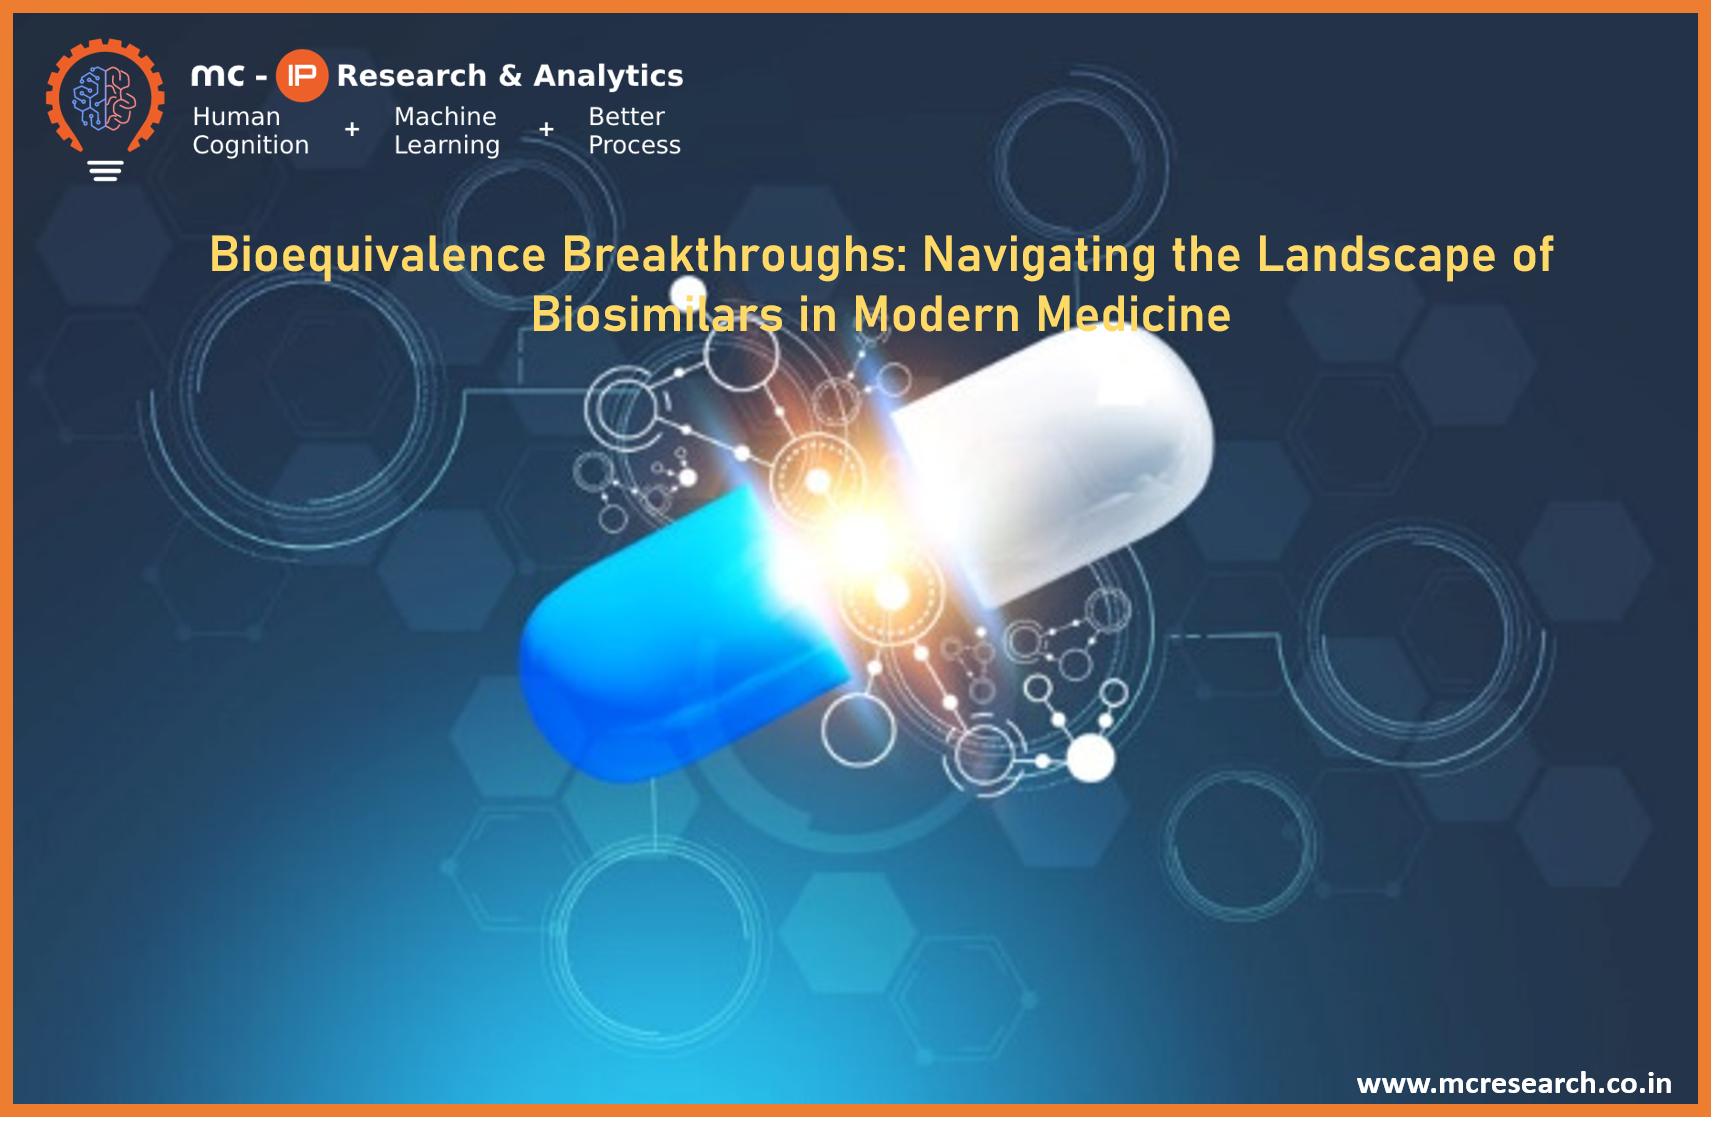 Bioequivalence Breakthroughs: Navigating the Landscape of Biosimilars in Modern Medicine